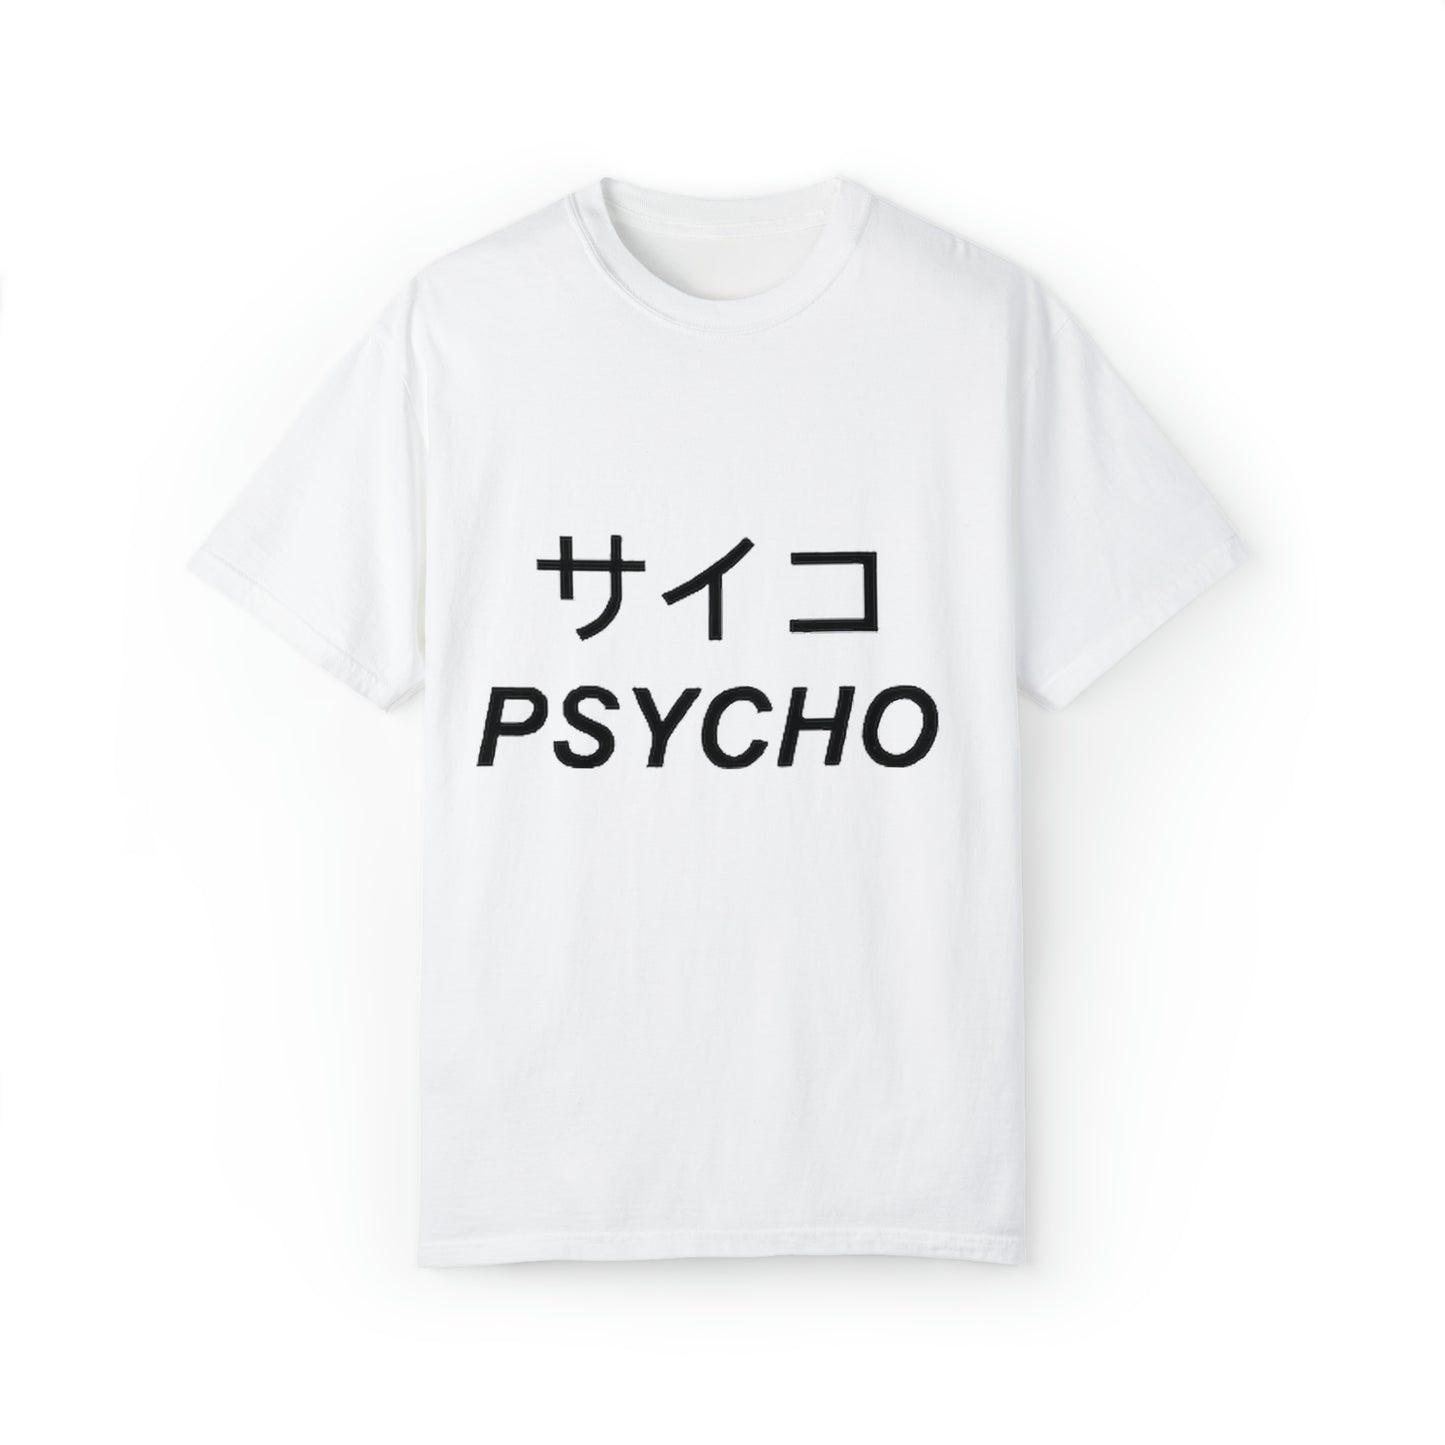 PSYCHO tshirt